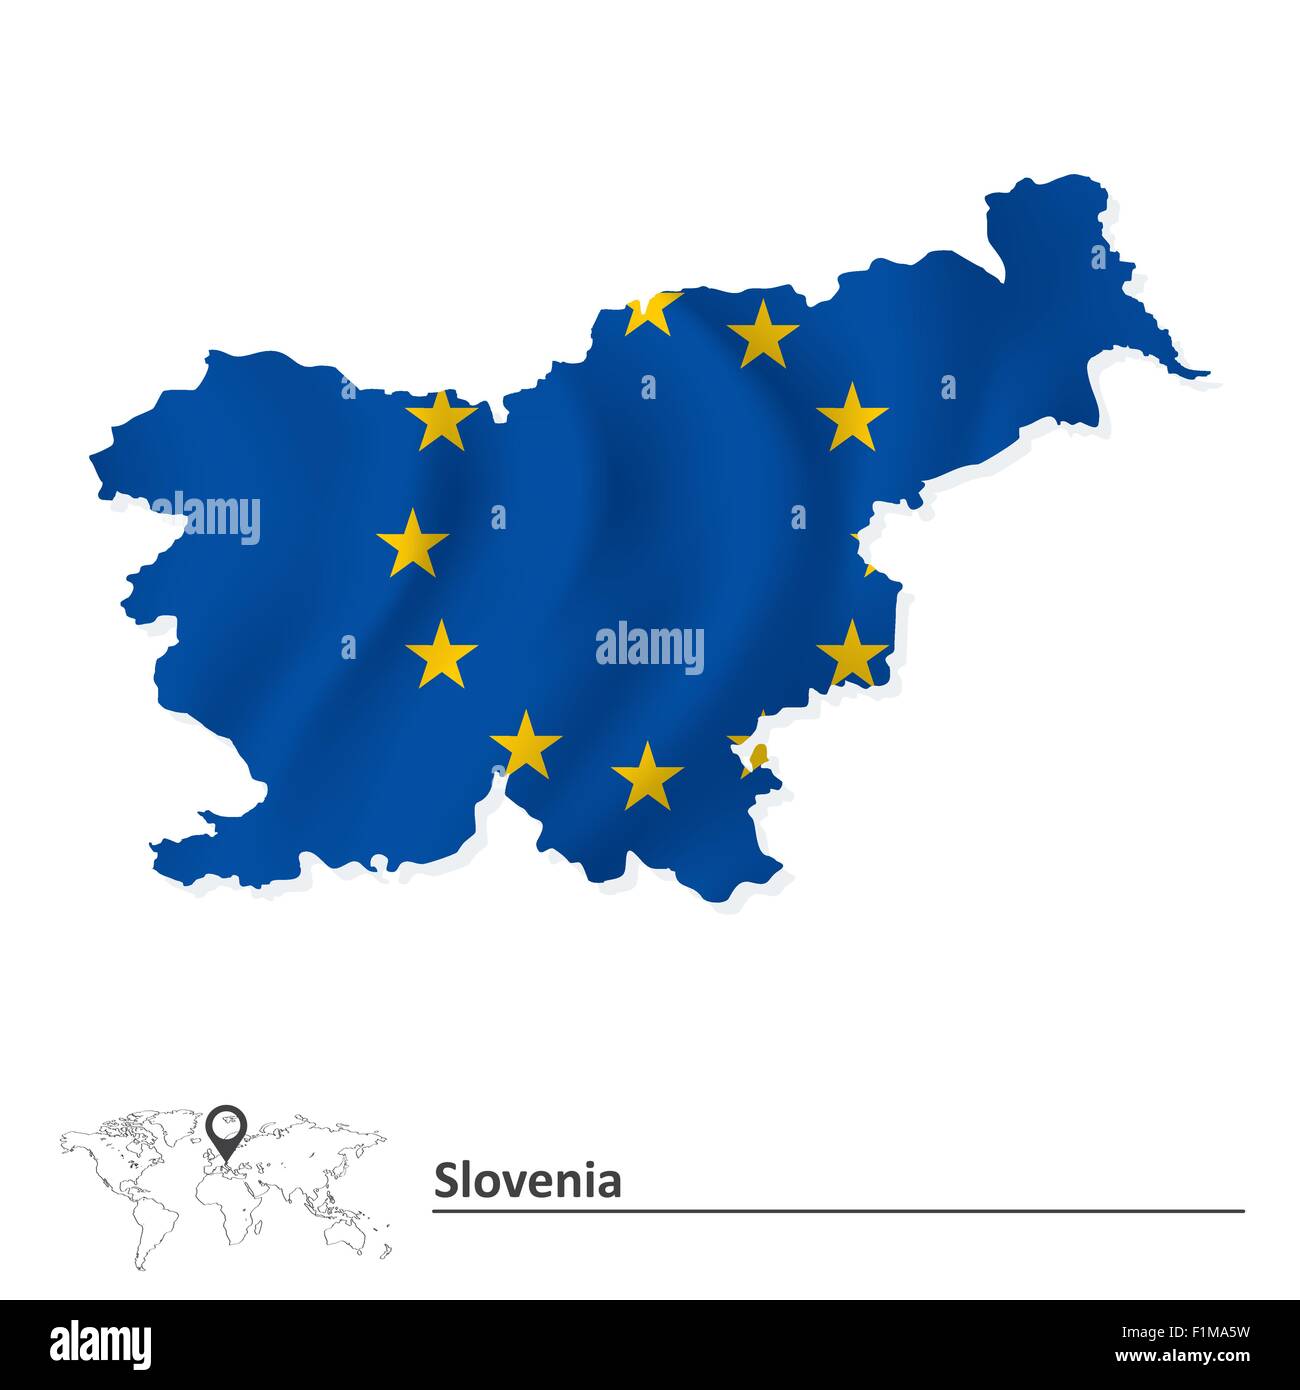 Karte von Slowenien mit EU-Flagge - Vektor-illustration Stock Vektor